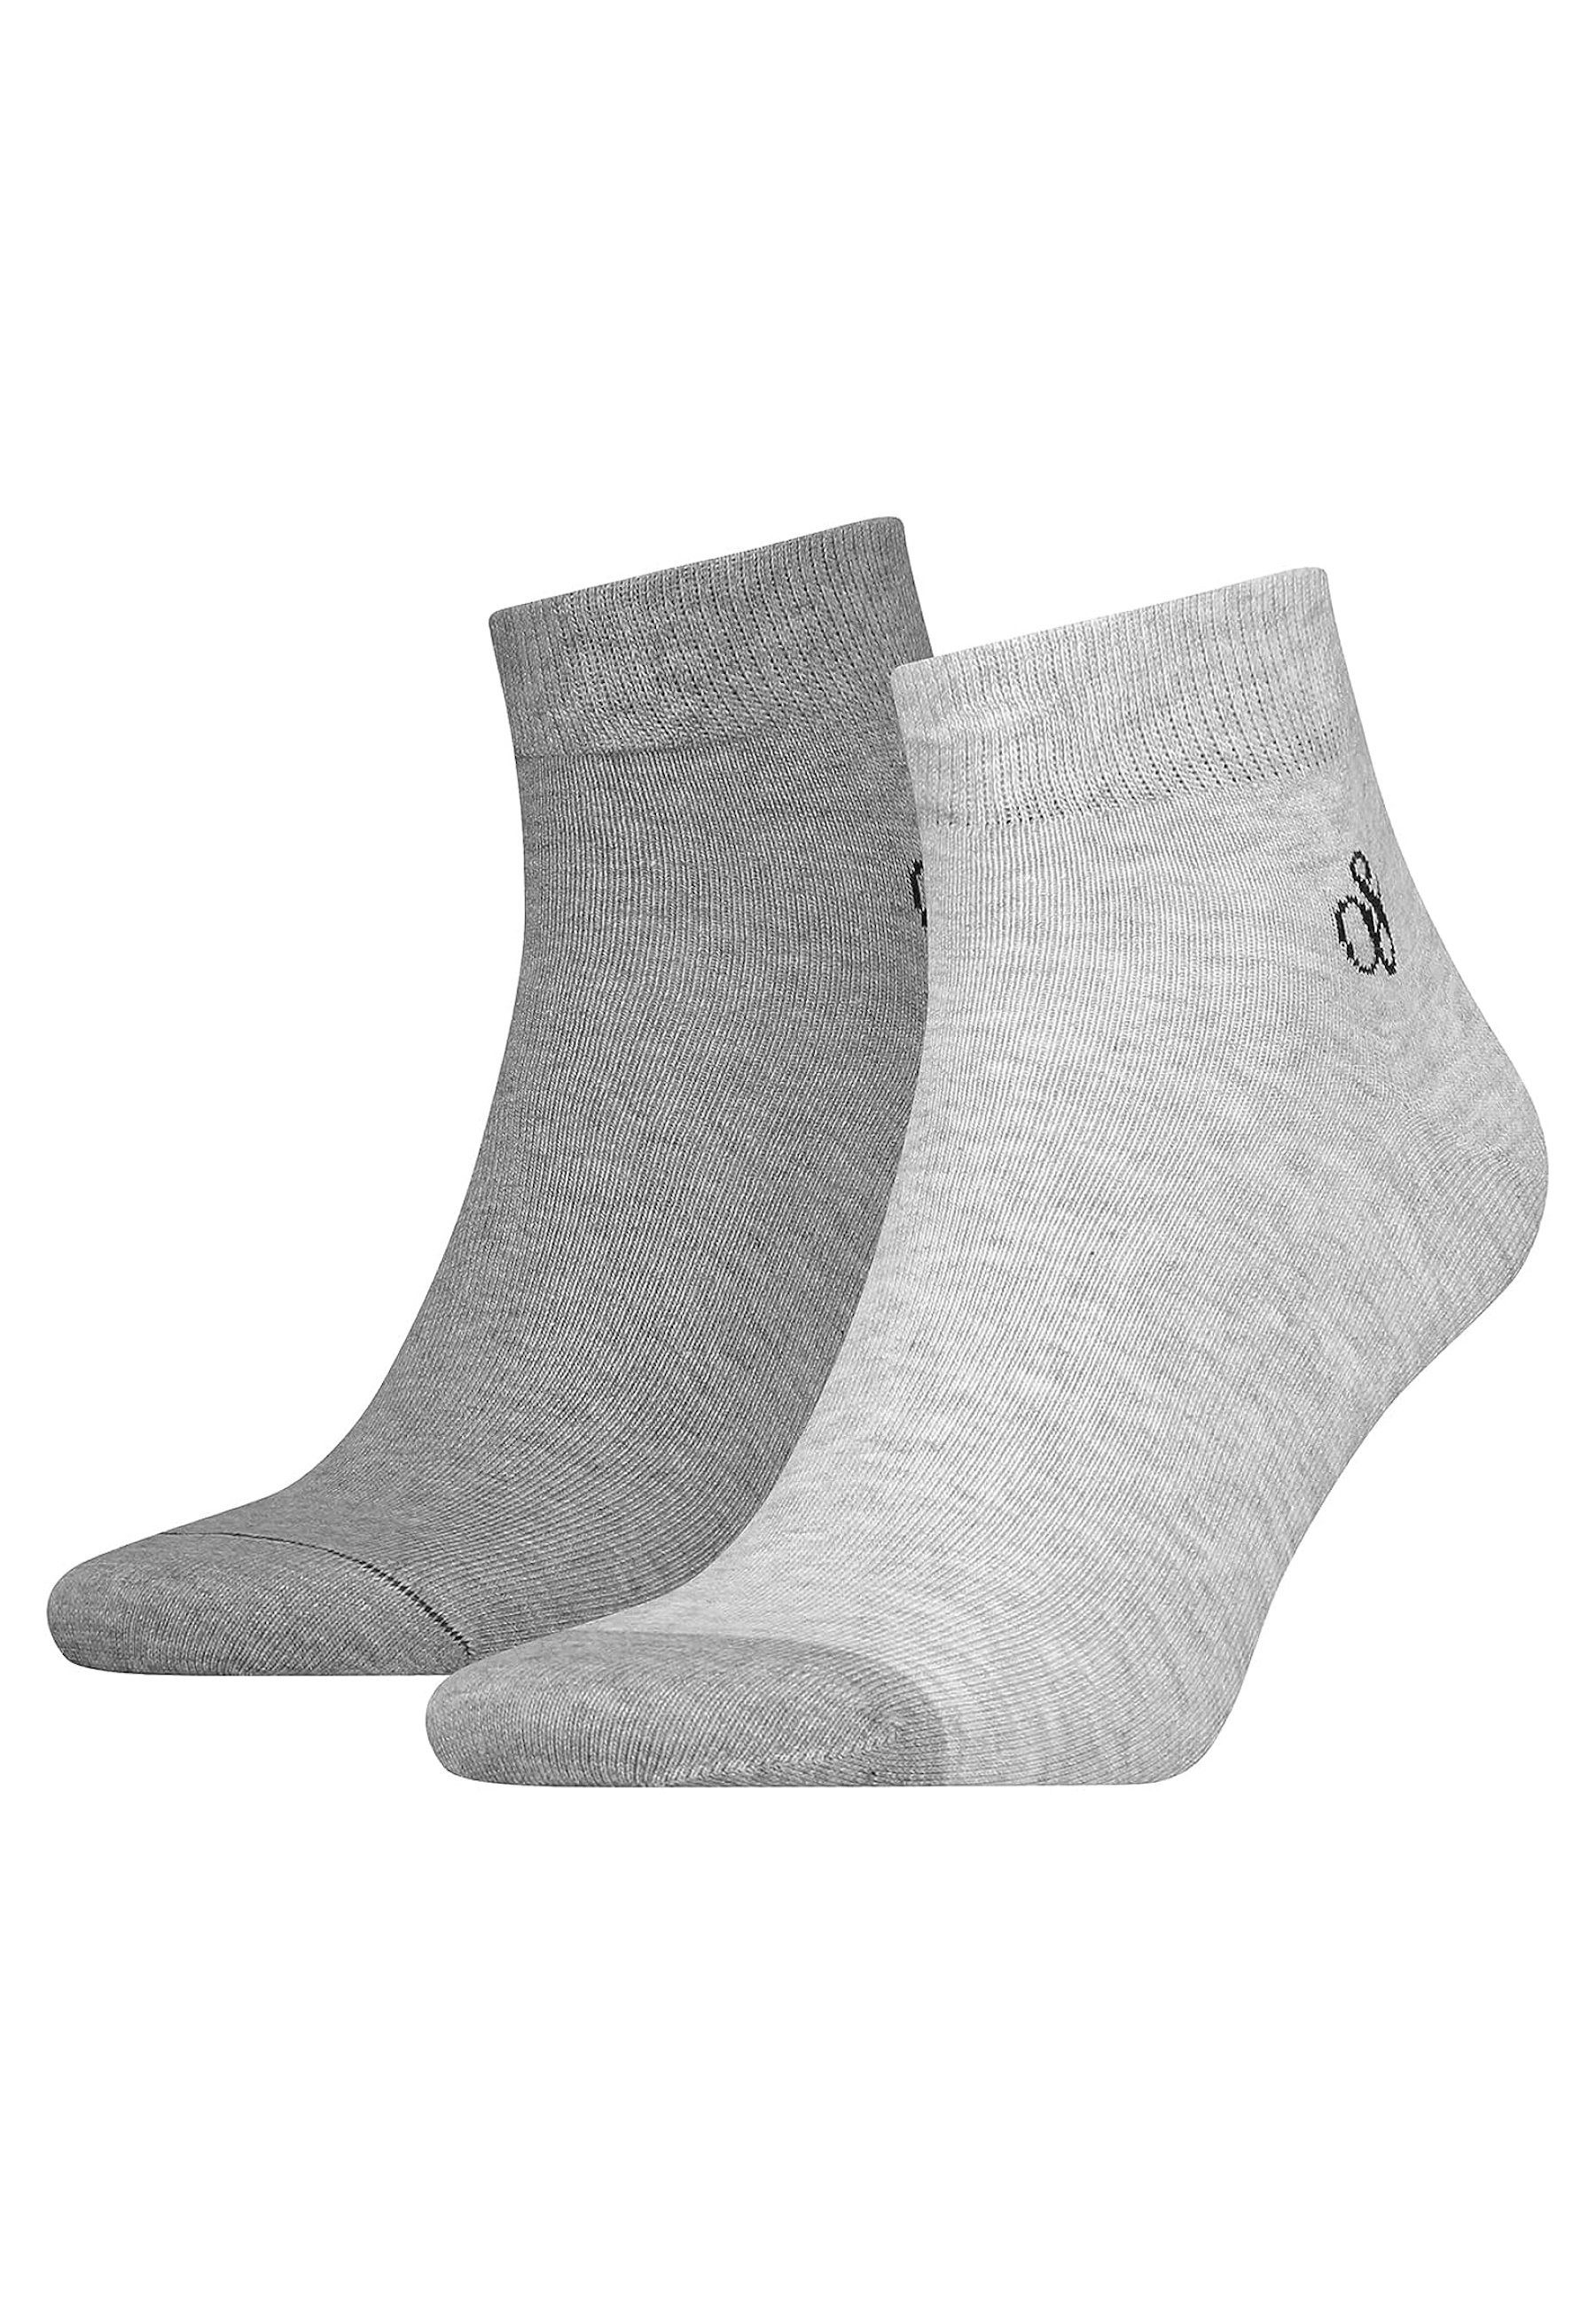 Socken Soda Dip Socken Quarter Toe & Doppelpack Socks Scotch (2-Paar) grau